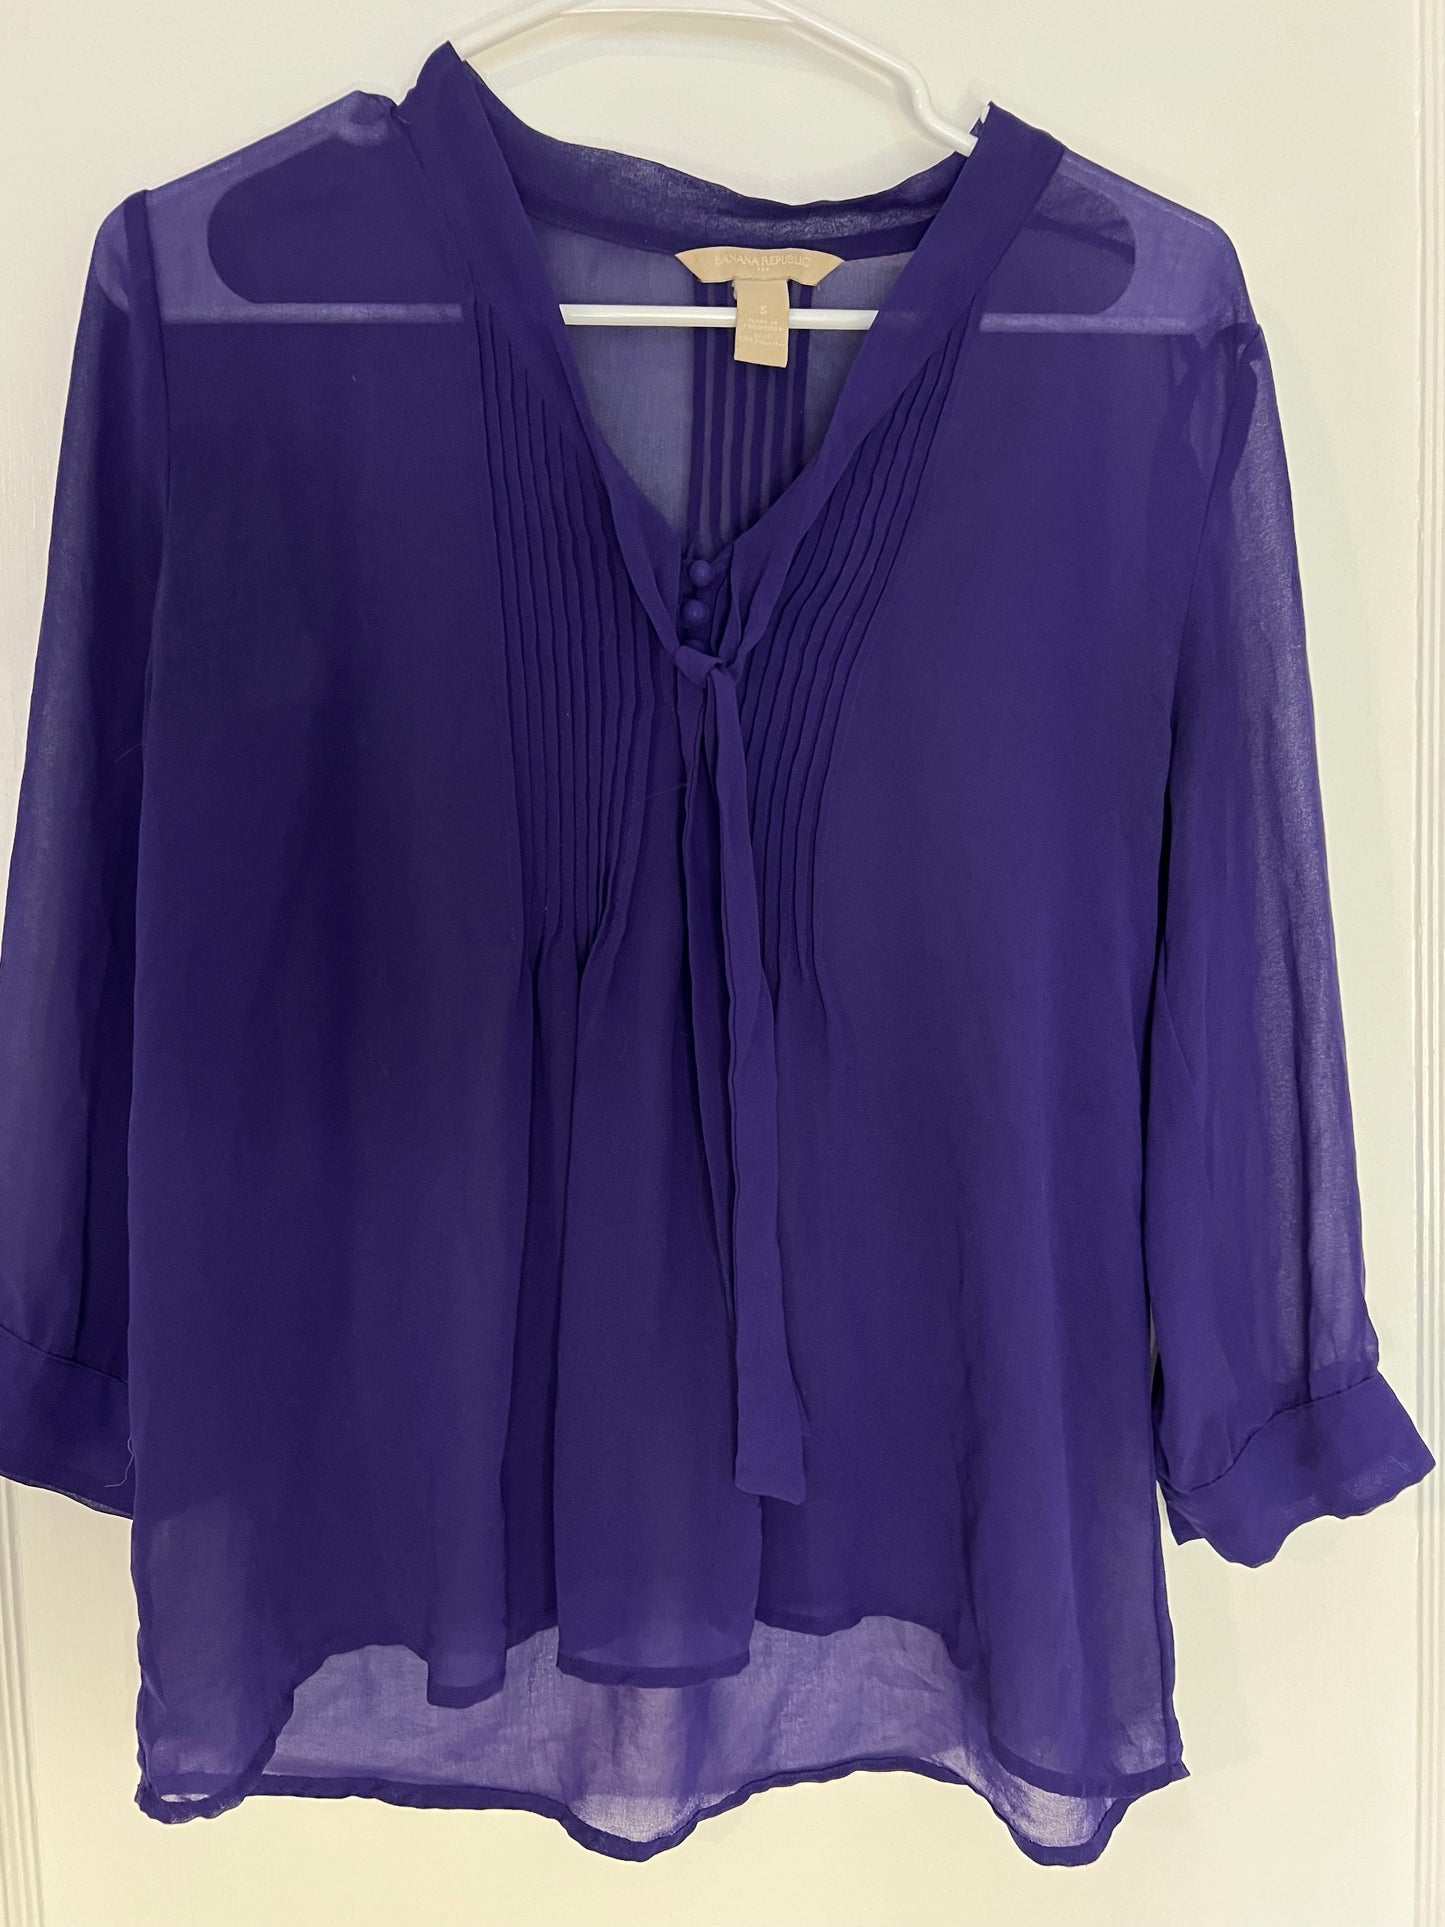 Banana Republic Sheer Purple 3/4 Sleeve Top Shirt Blouse Size Small EUC PPU 45208 or Spring Sale